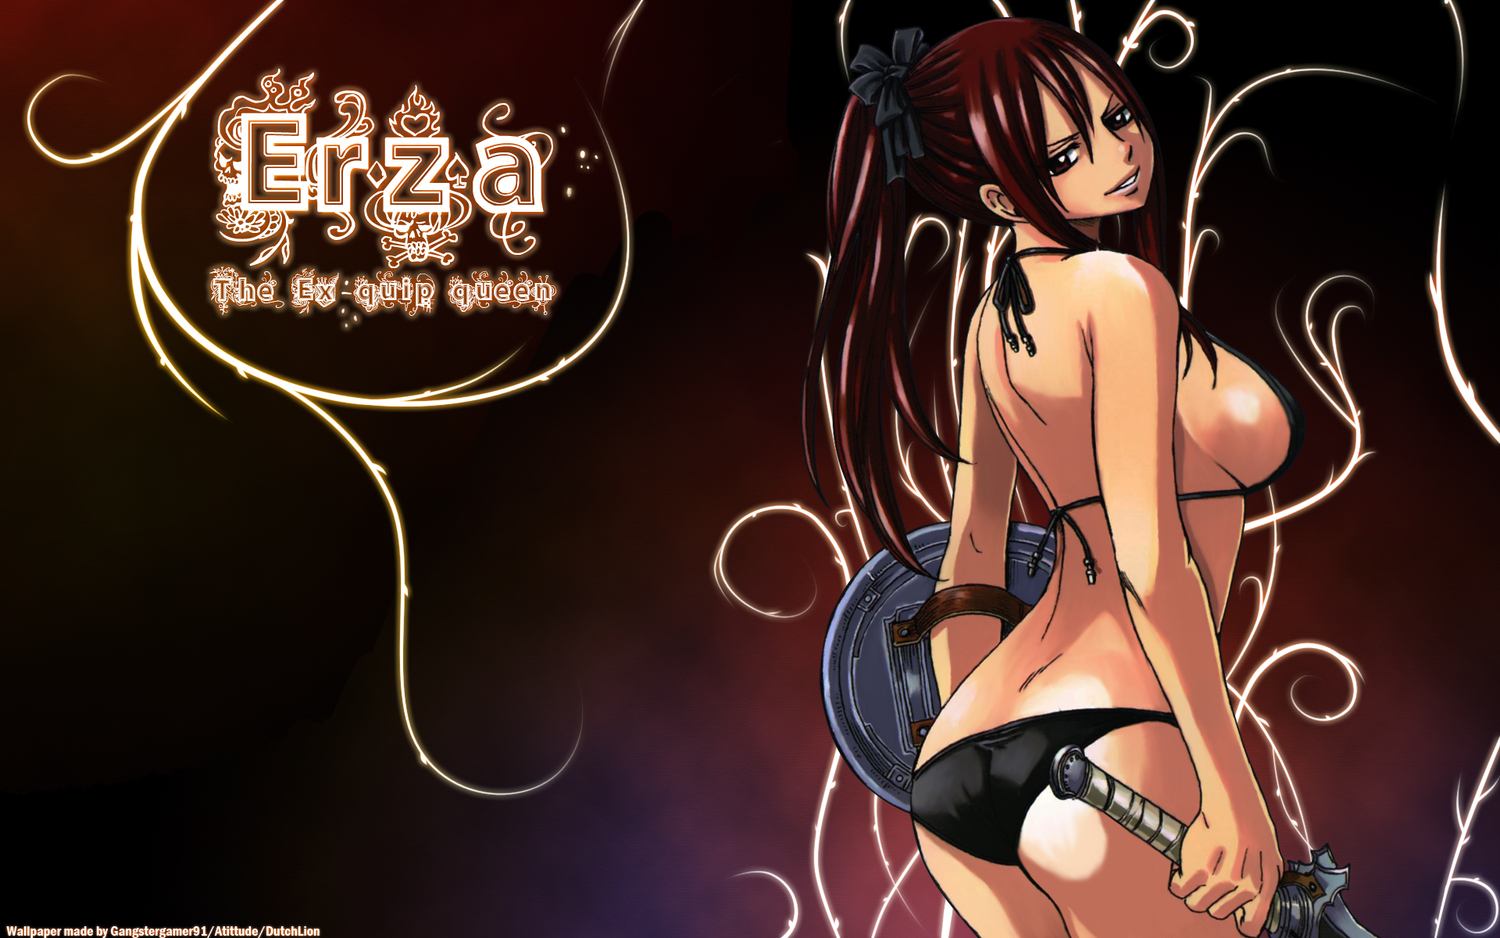 Anime 1500x938 Scarlet Erza Fairy Tail bikini manga